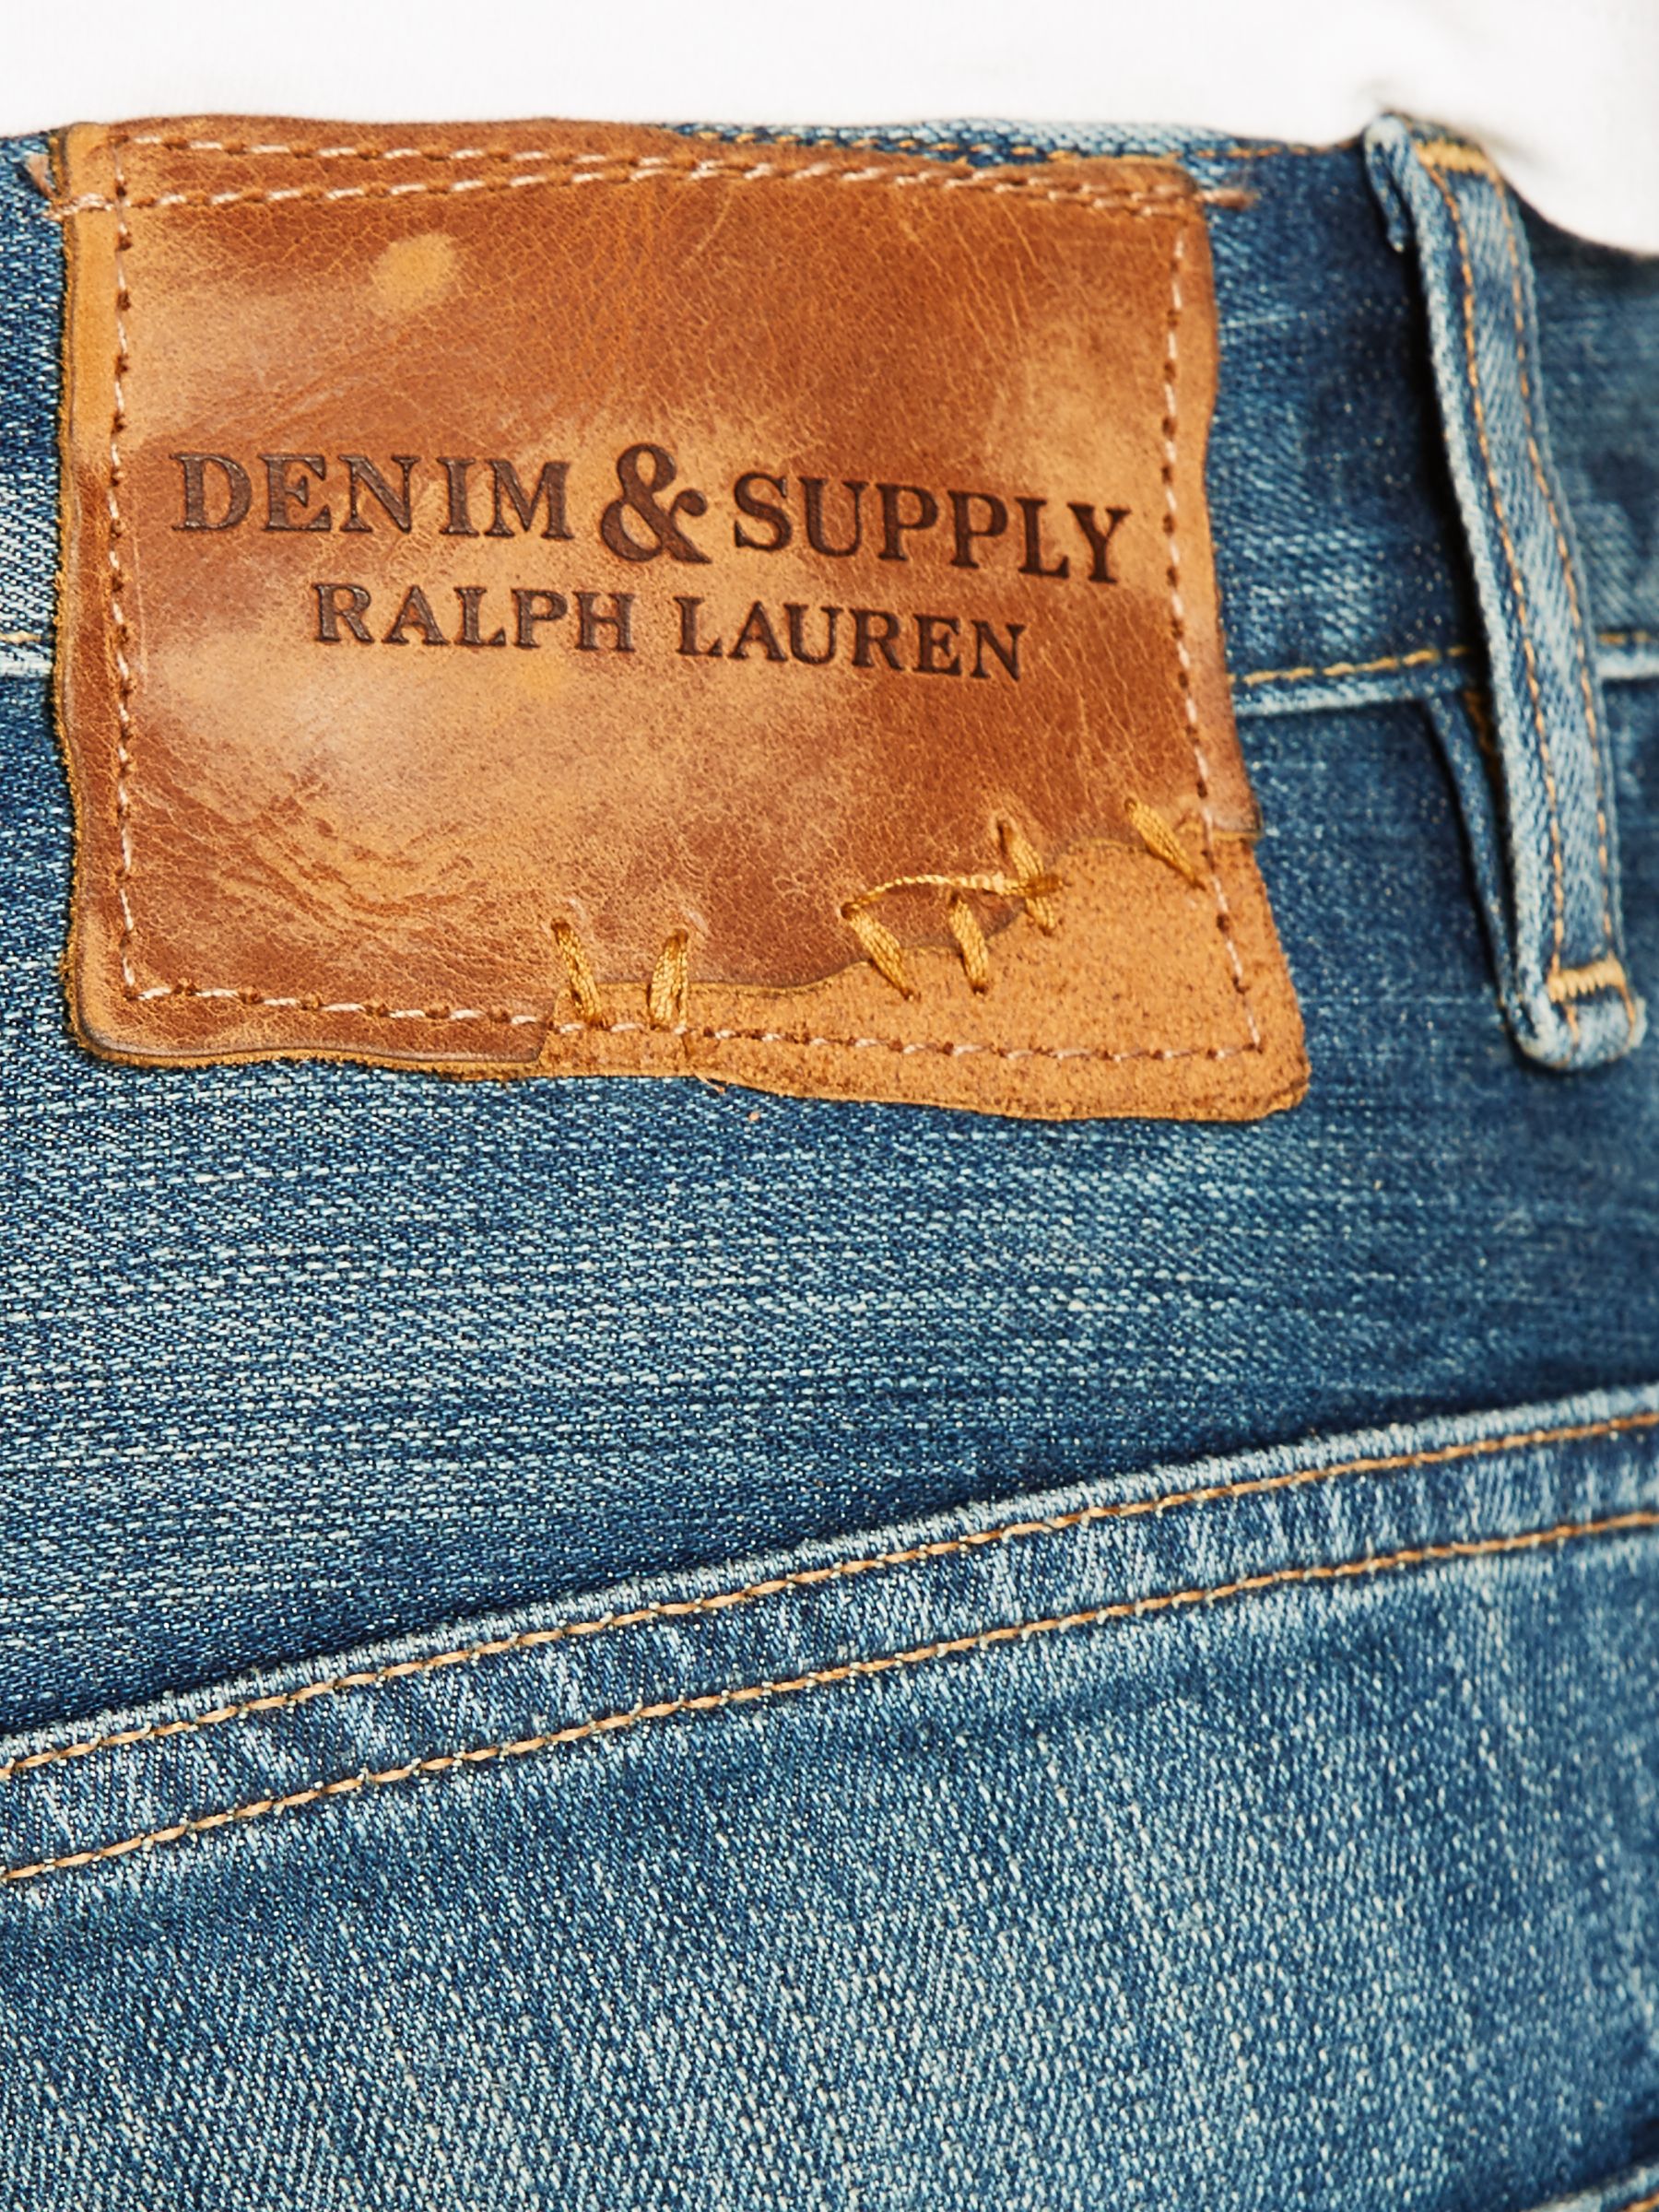 denim and supply ralph lauren jeans